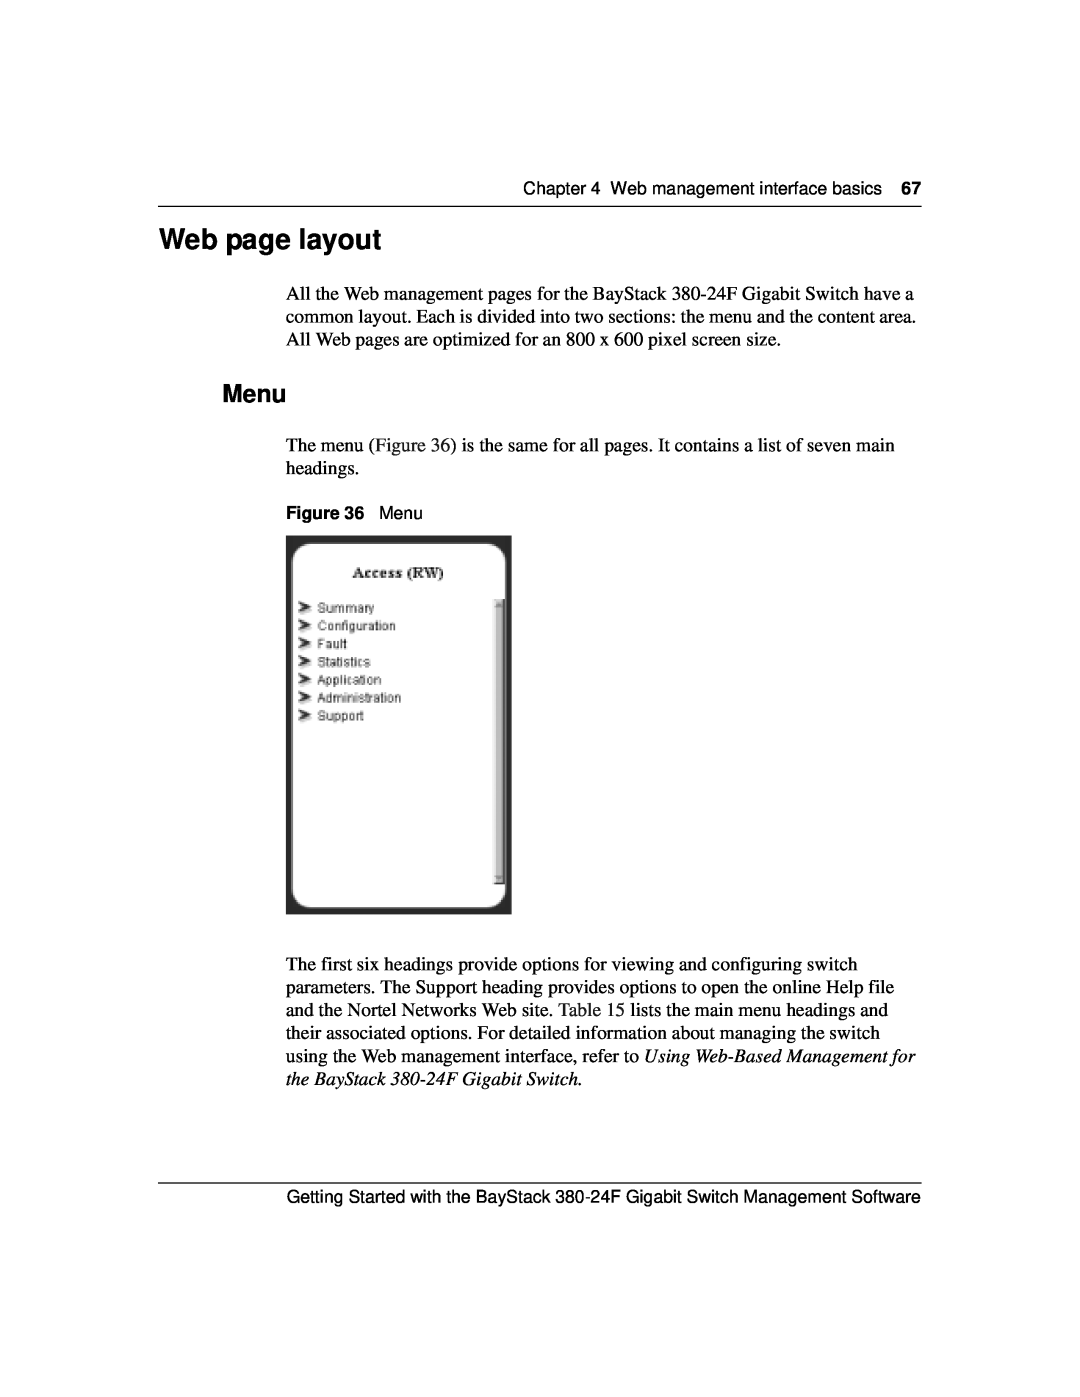 Nortel Networks 380-24F manual Web page layout, Menu 